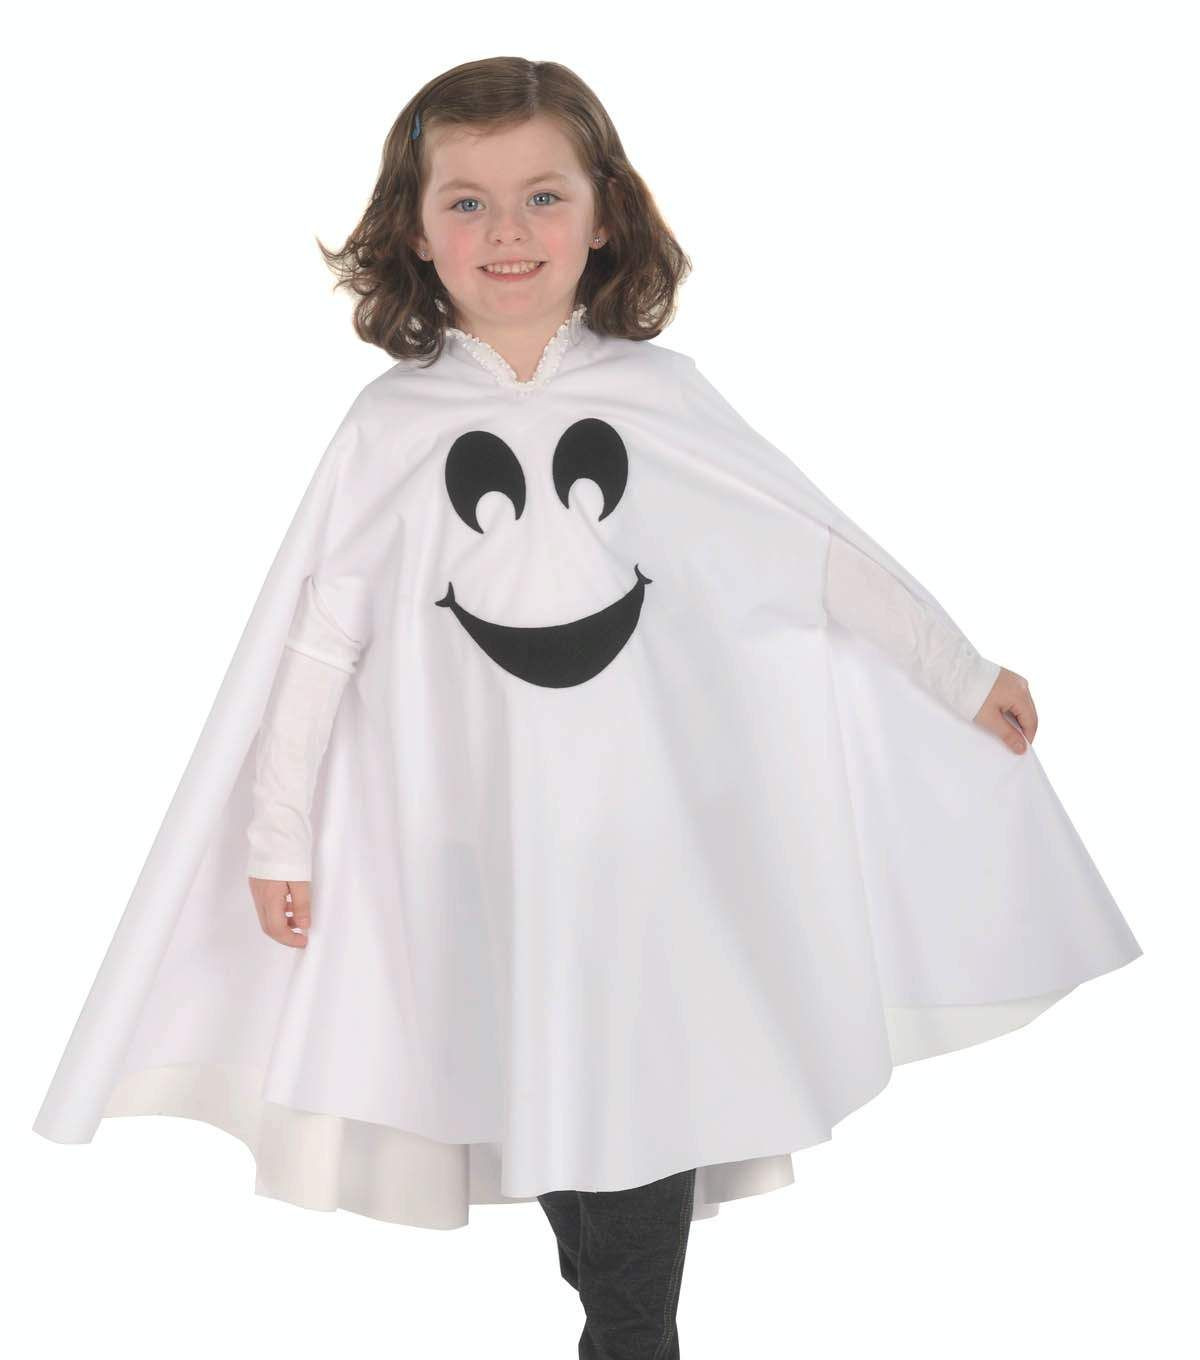 DIY Ghost Costume Kids
 Stay Dry Ghost Costume …